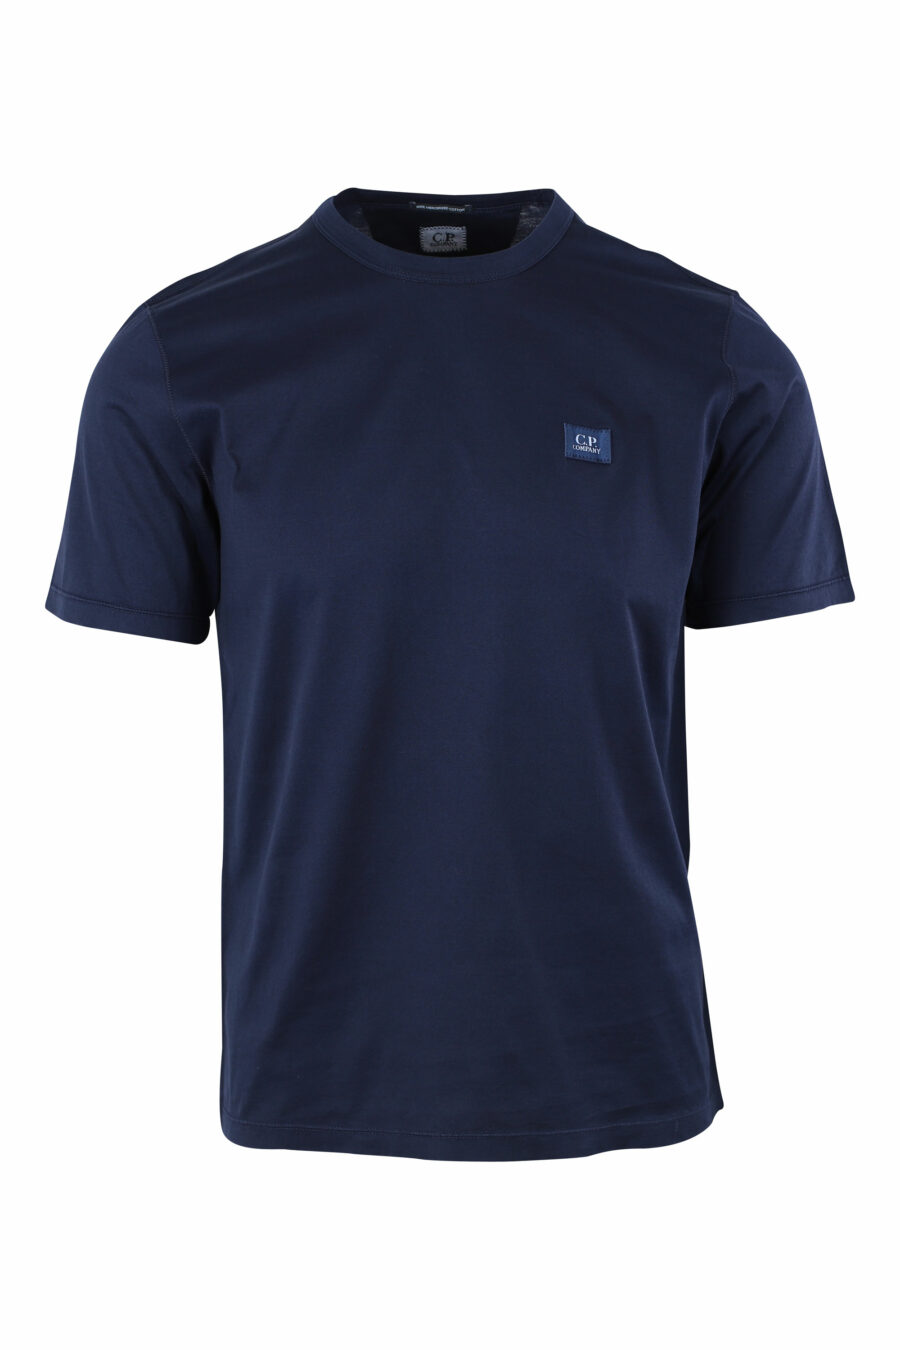 T-shirt bleu foncé avec mini patch logo - IMG 9651